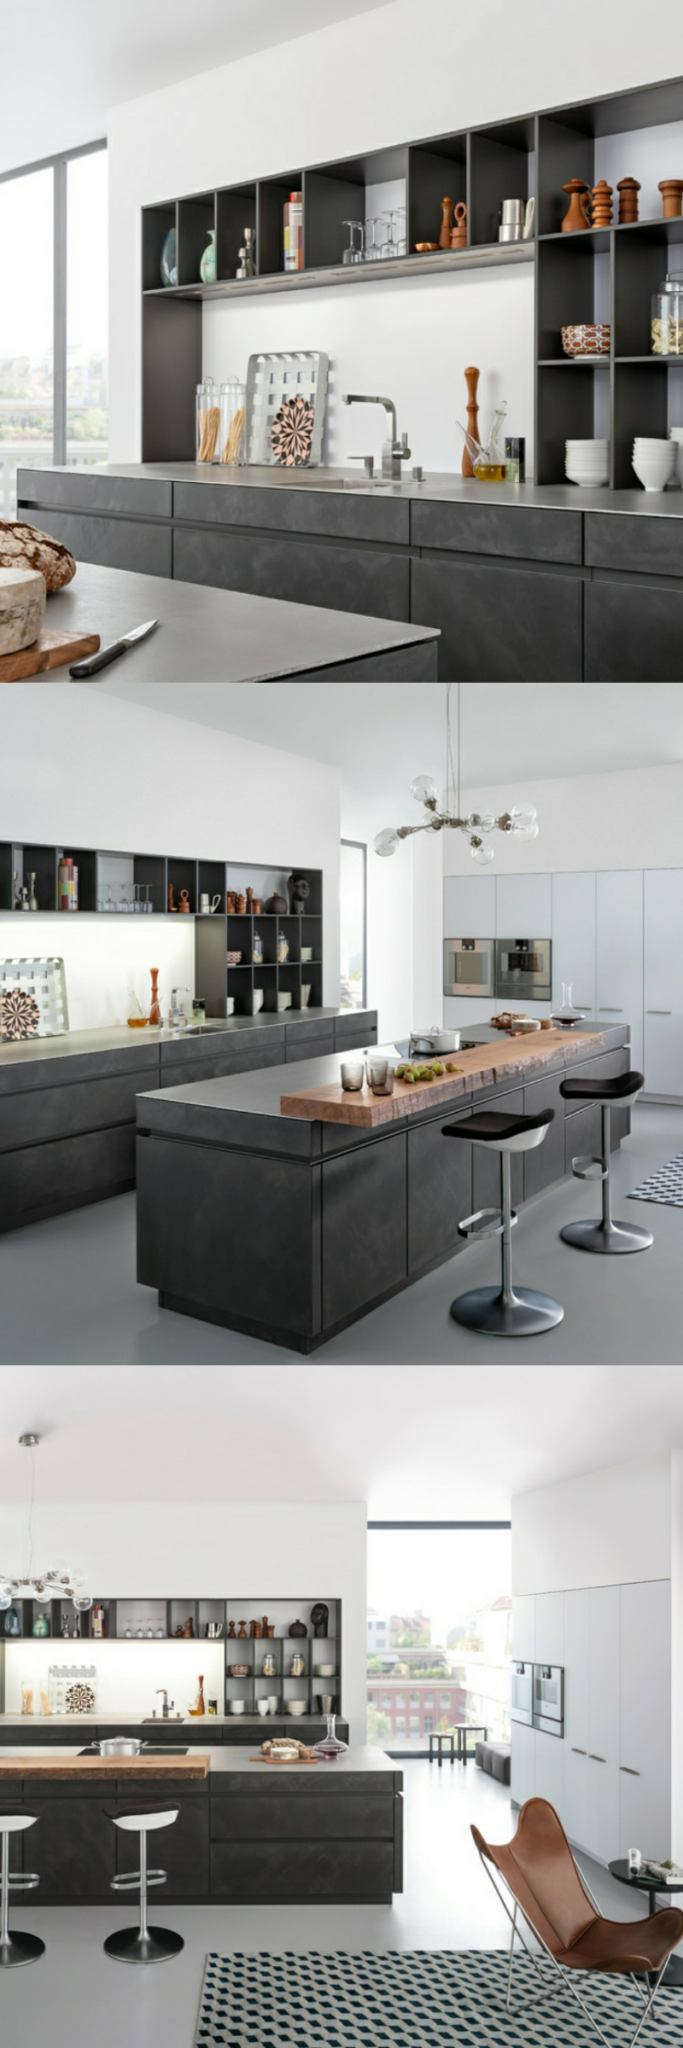 kitchen grey floors white cabinets